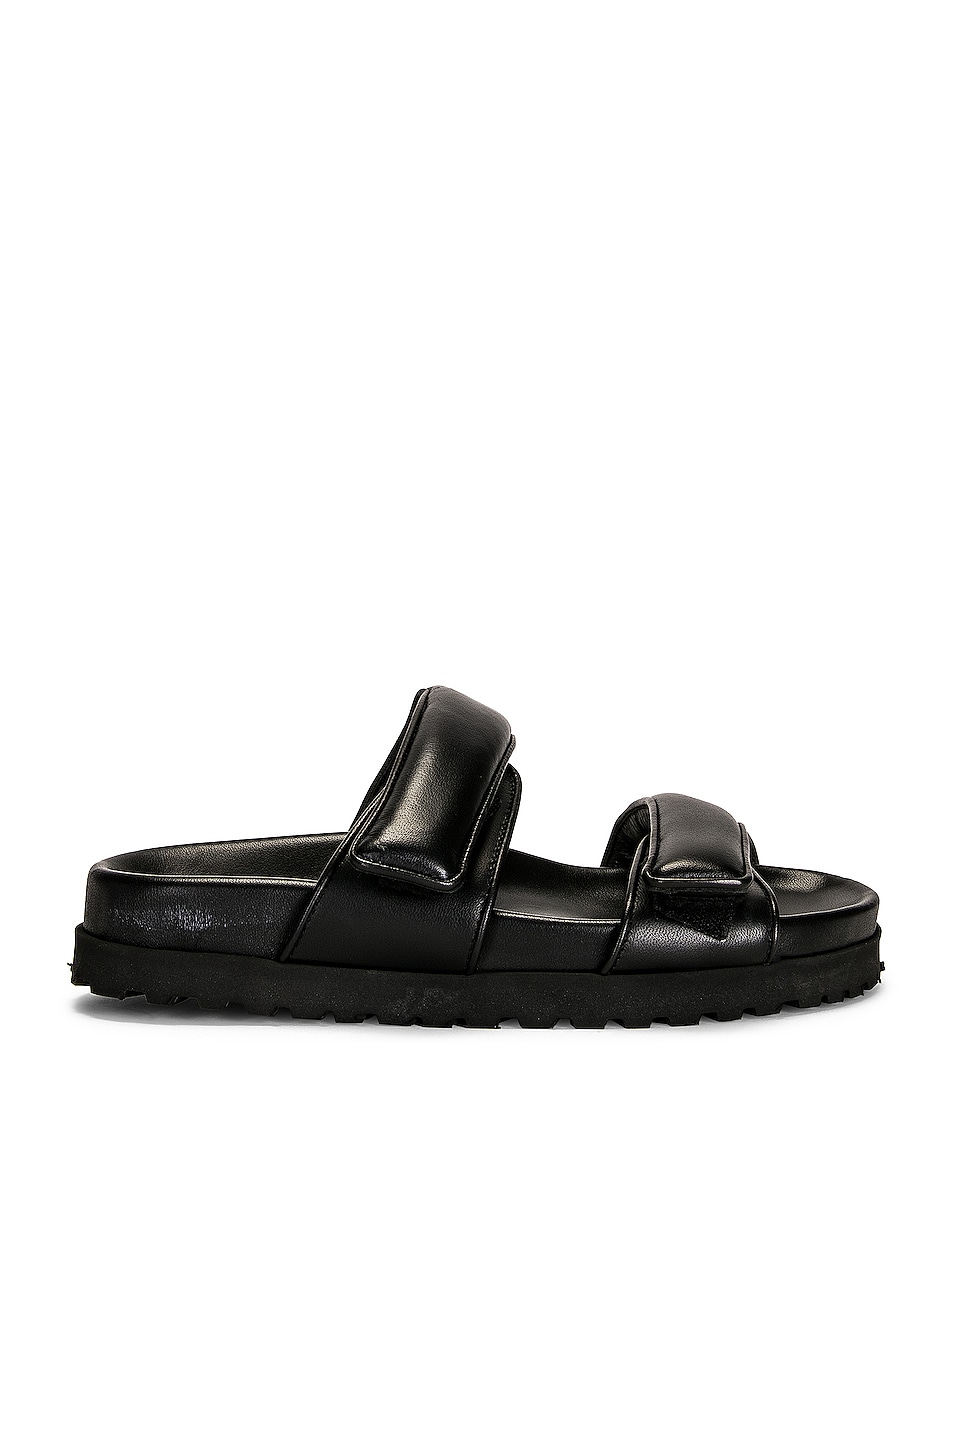 Image 1 of GIA BORGHINI x Pernille Teisbaek Leather Platform Sandal in Black